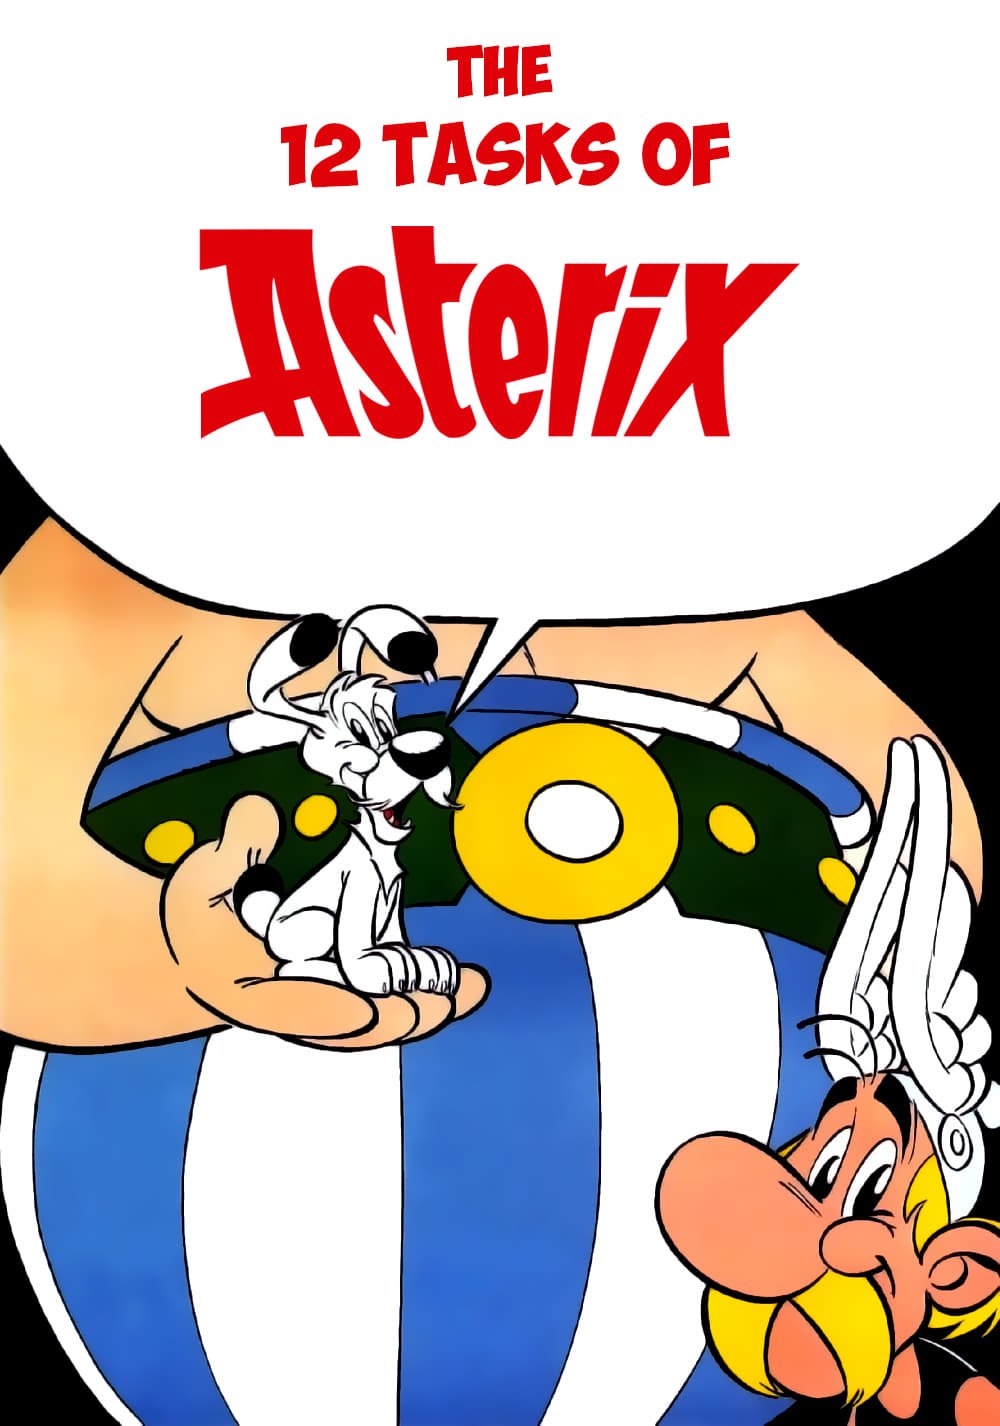 Asterix erobert Rom (1976)